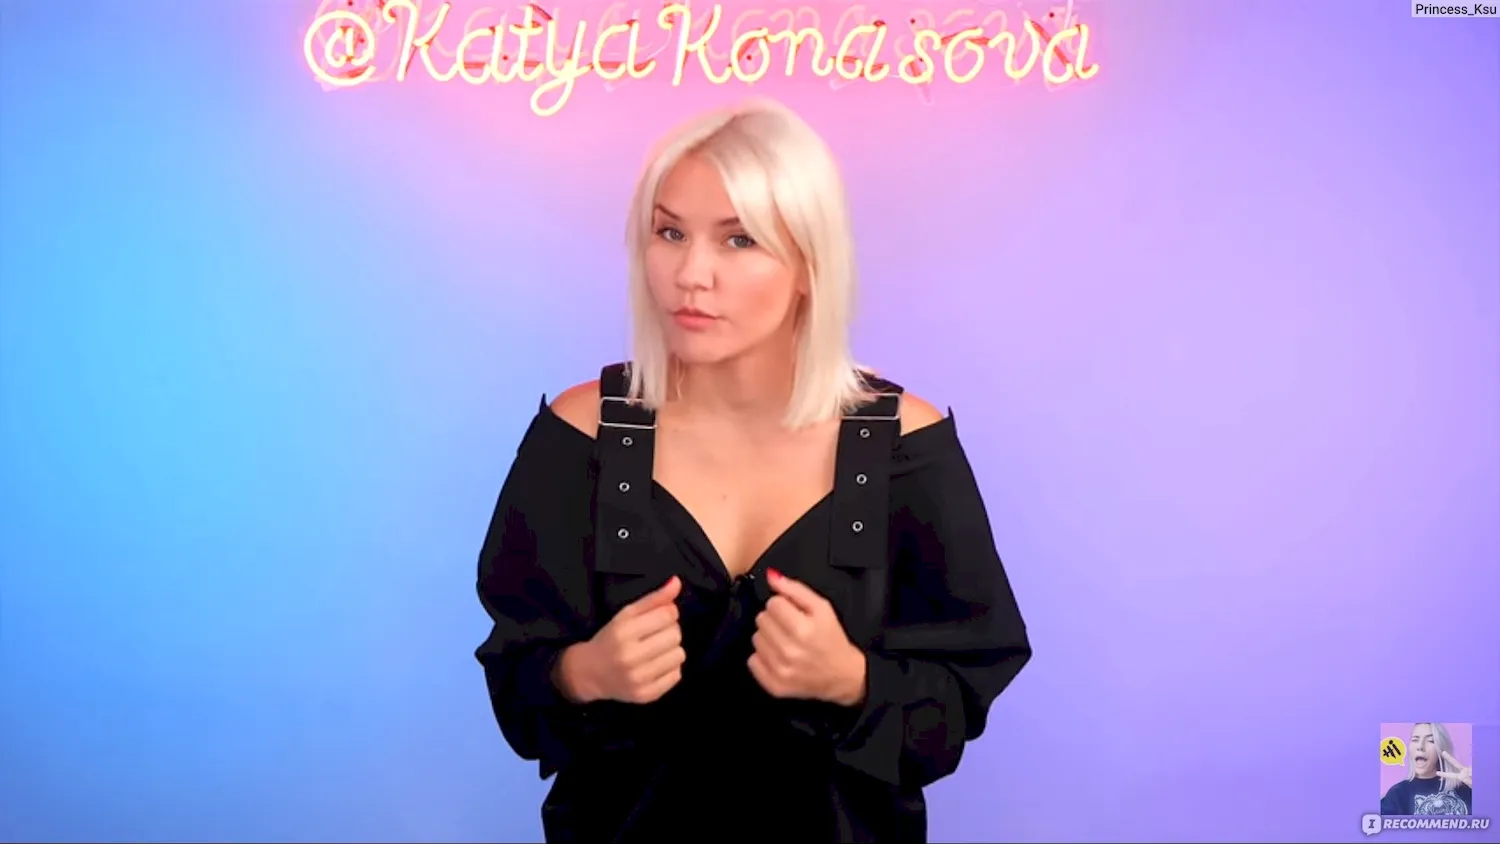 Екатерина Конасова блогер